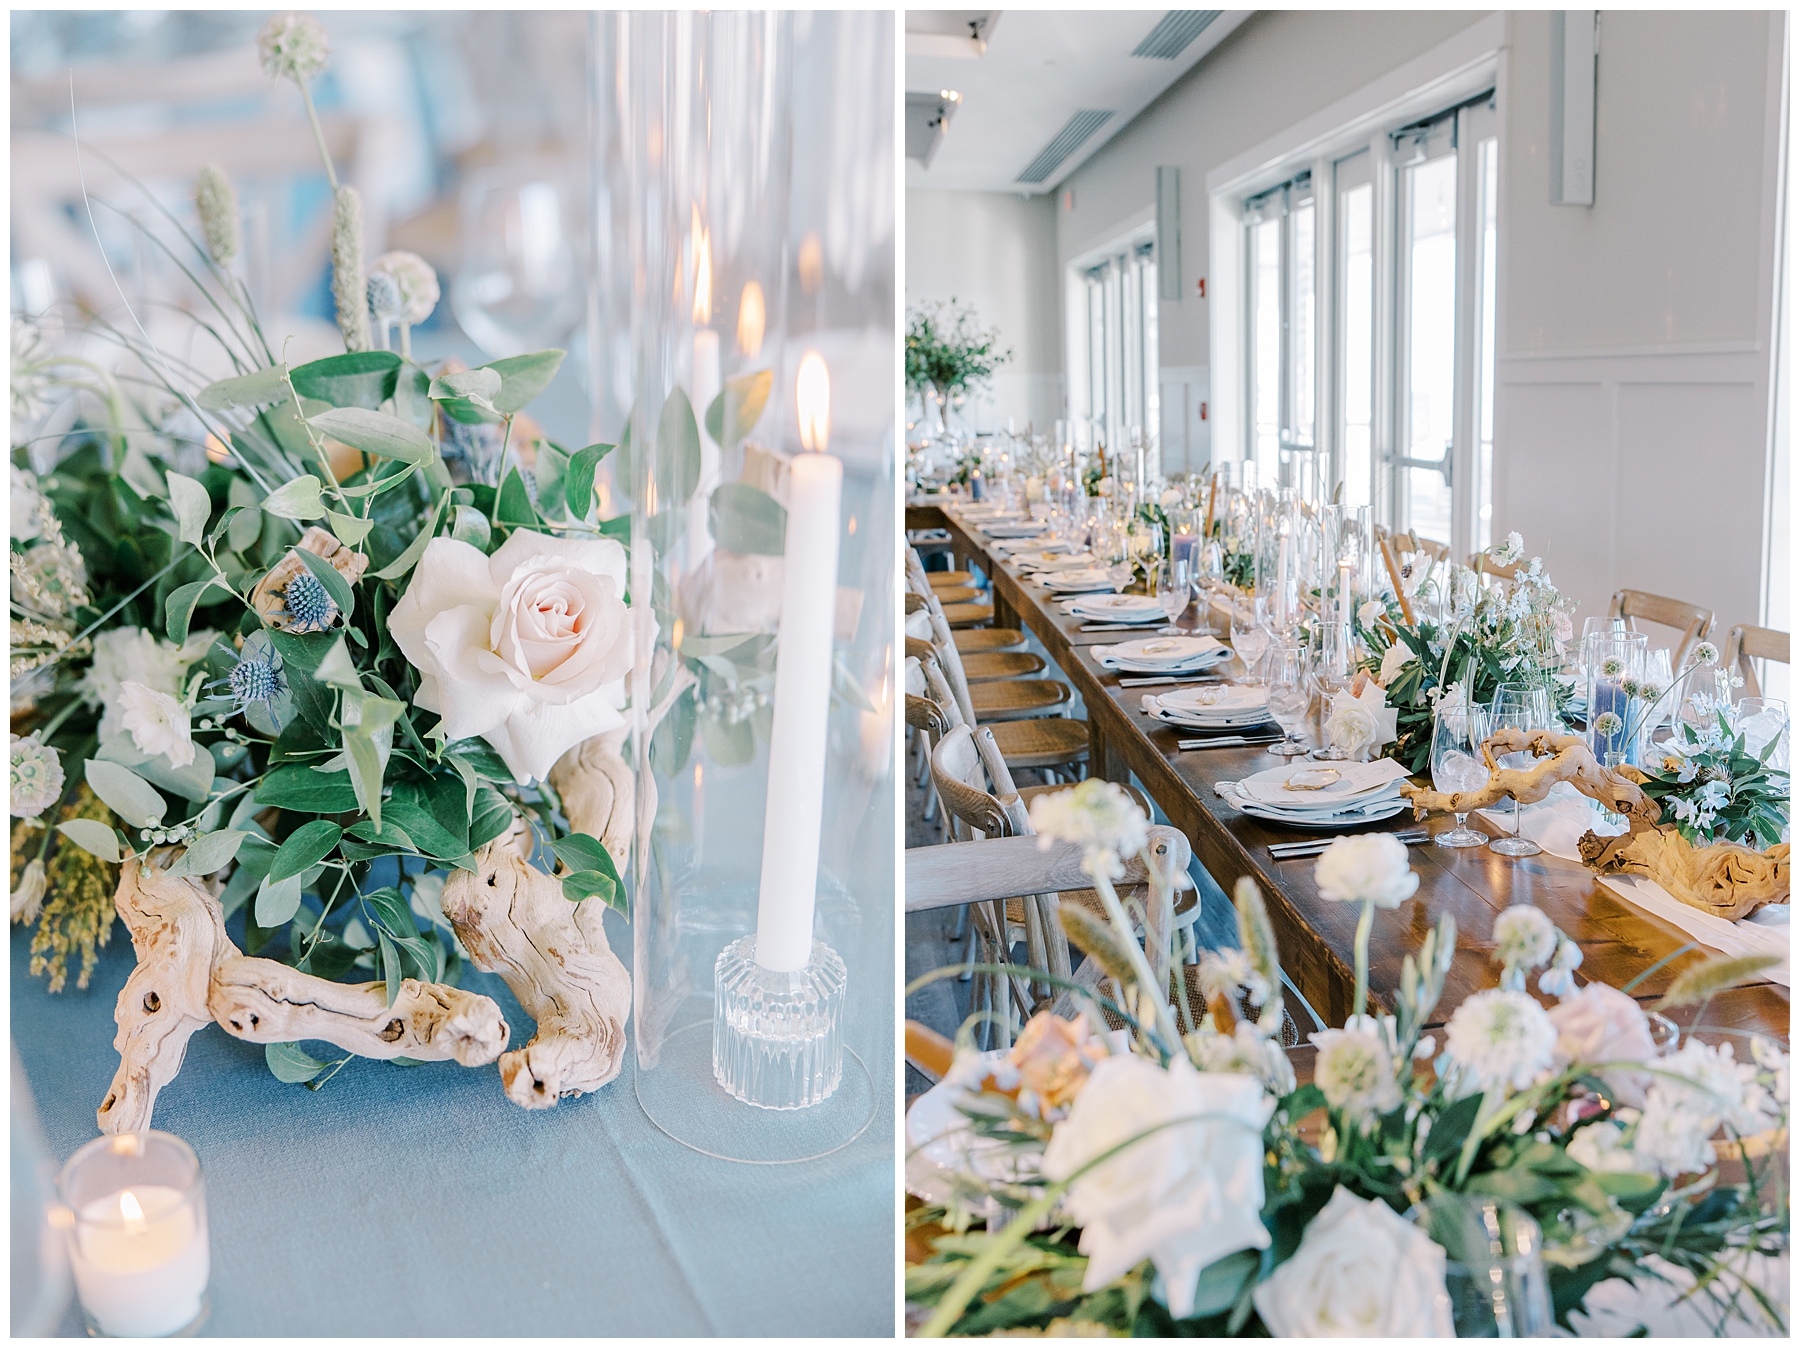 floral arrangements decorate center of tables at Coastal Cape Cod Wedding at Pelham House Resort